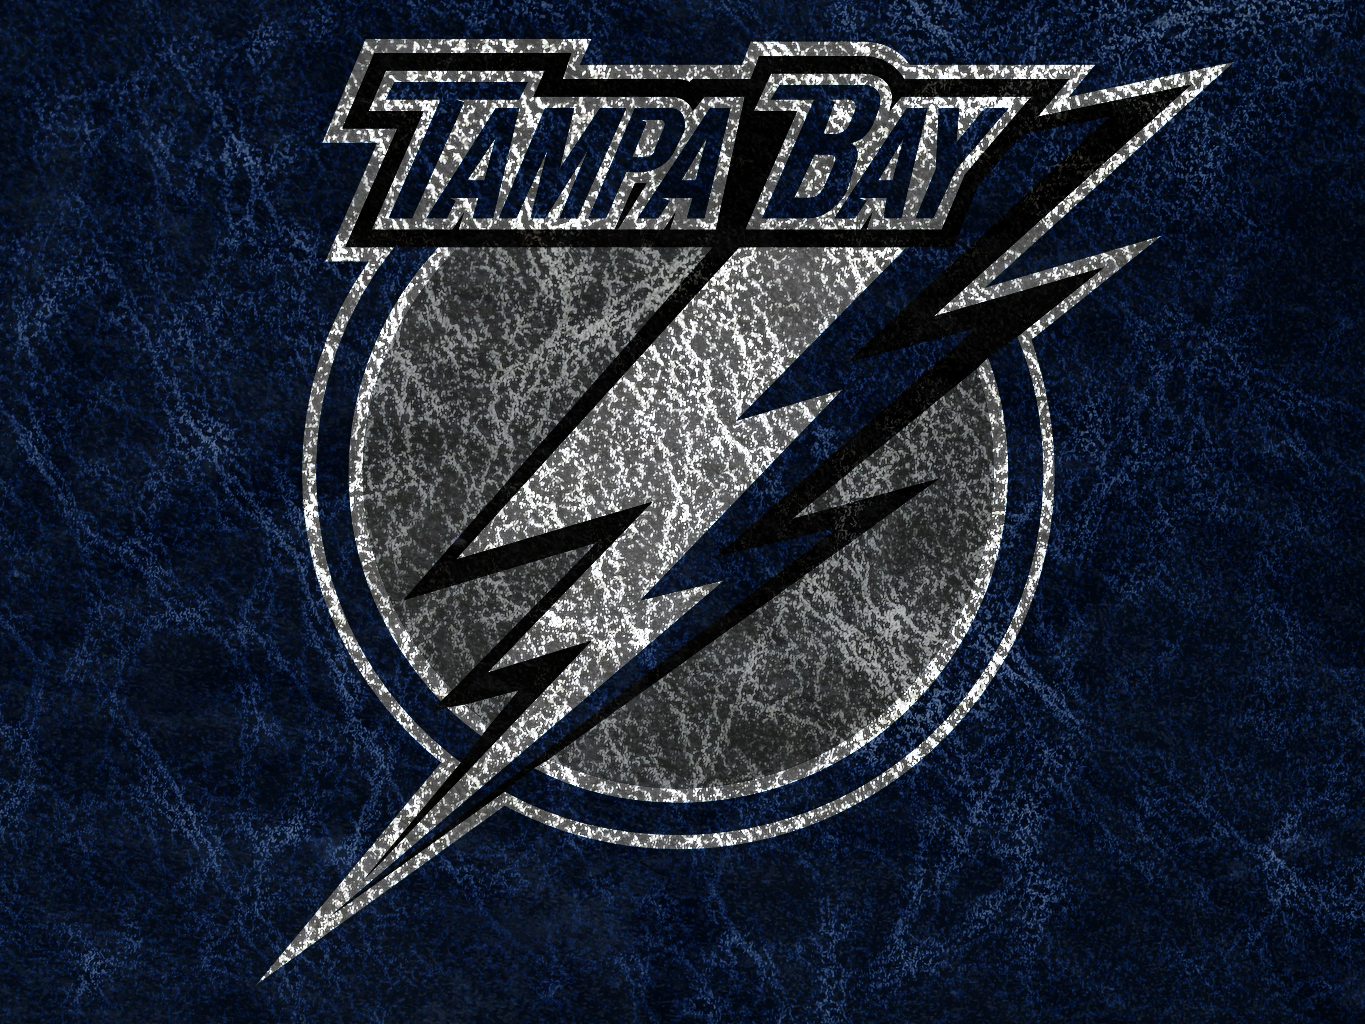 Tampa Bay Lightning by CorvusCorax92 on